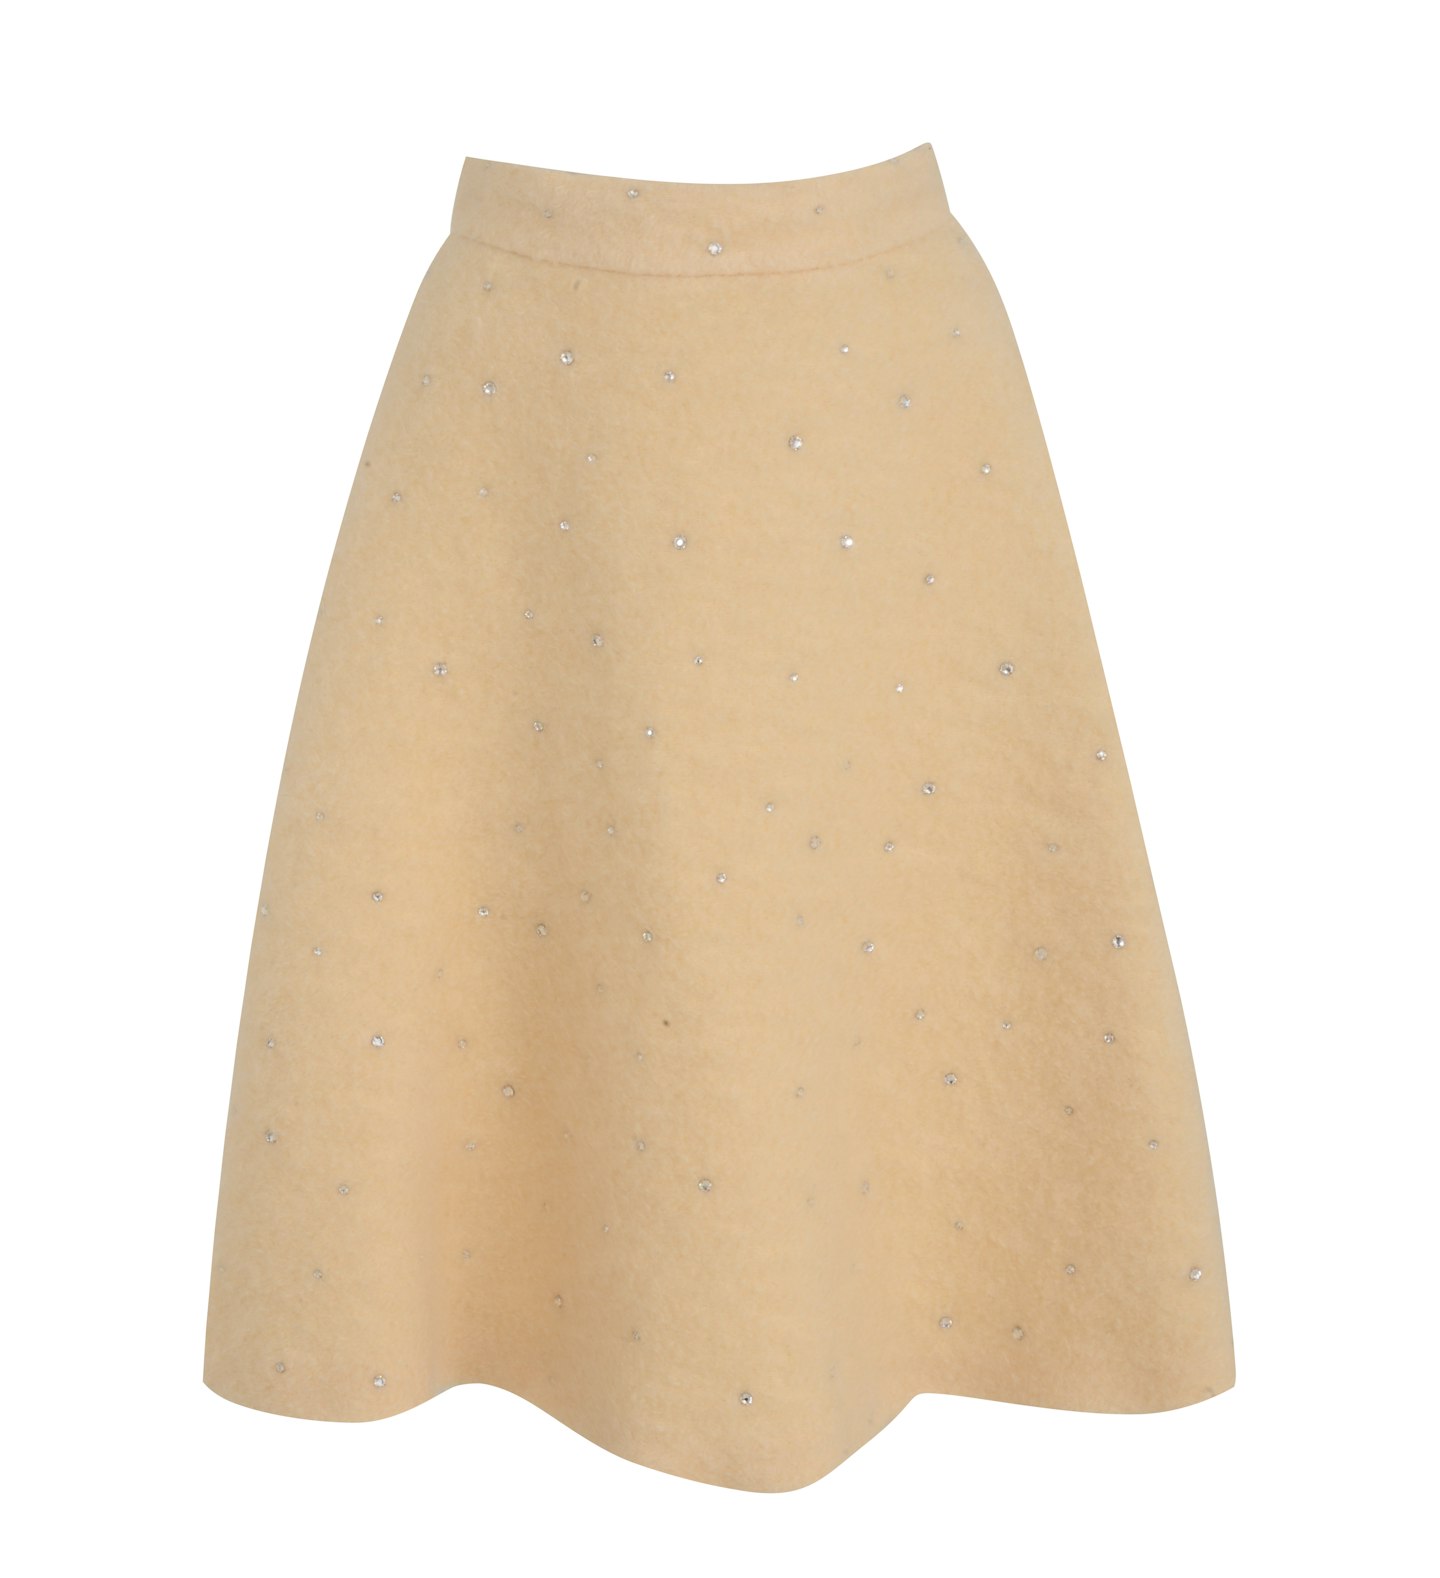 Naomie Harris' Miu Miu Skirt, £210